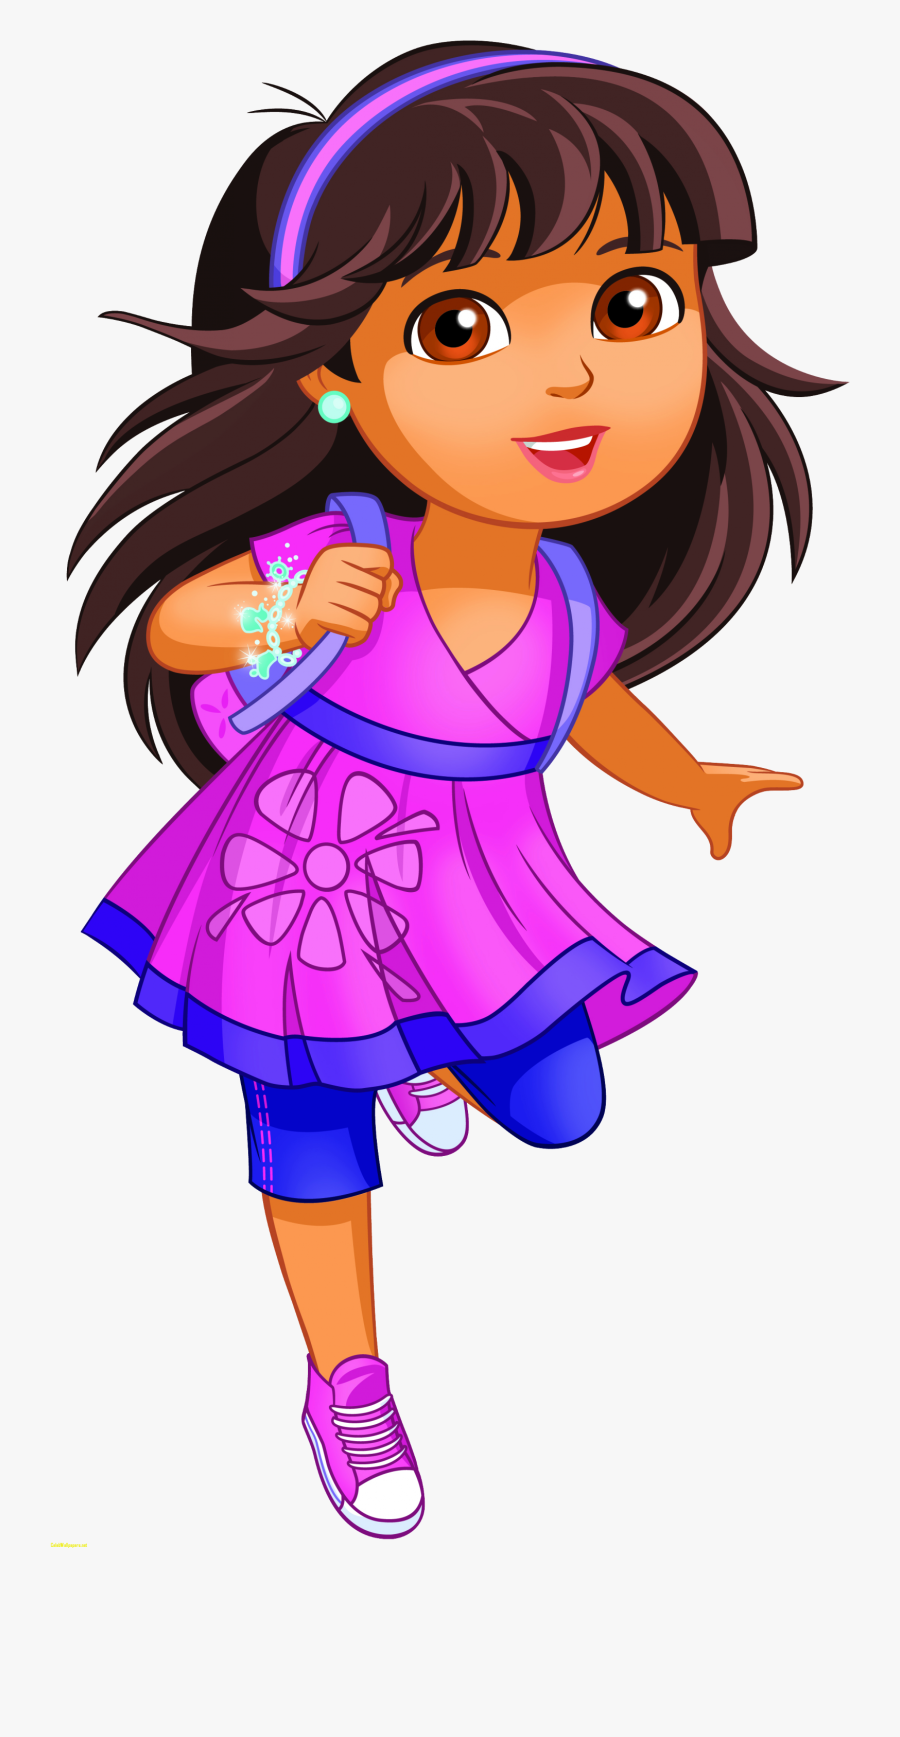 Dora Images Dora Clipart Free Download Clip Art Free - Dora And Friends Png, Transparent Clipart